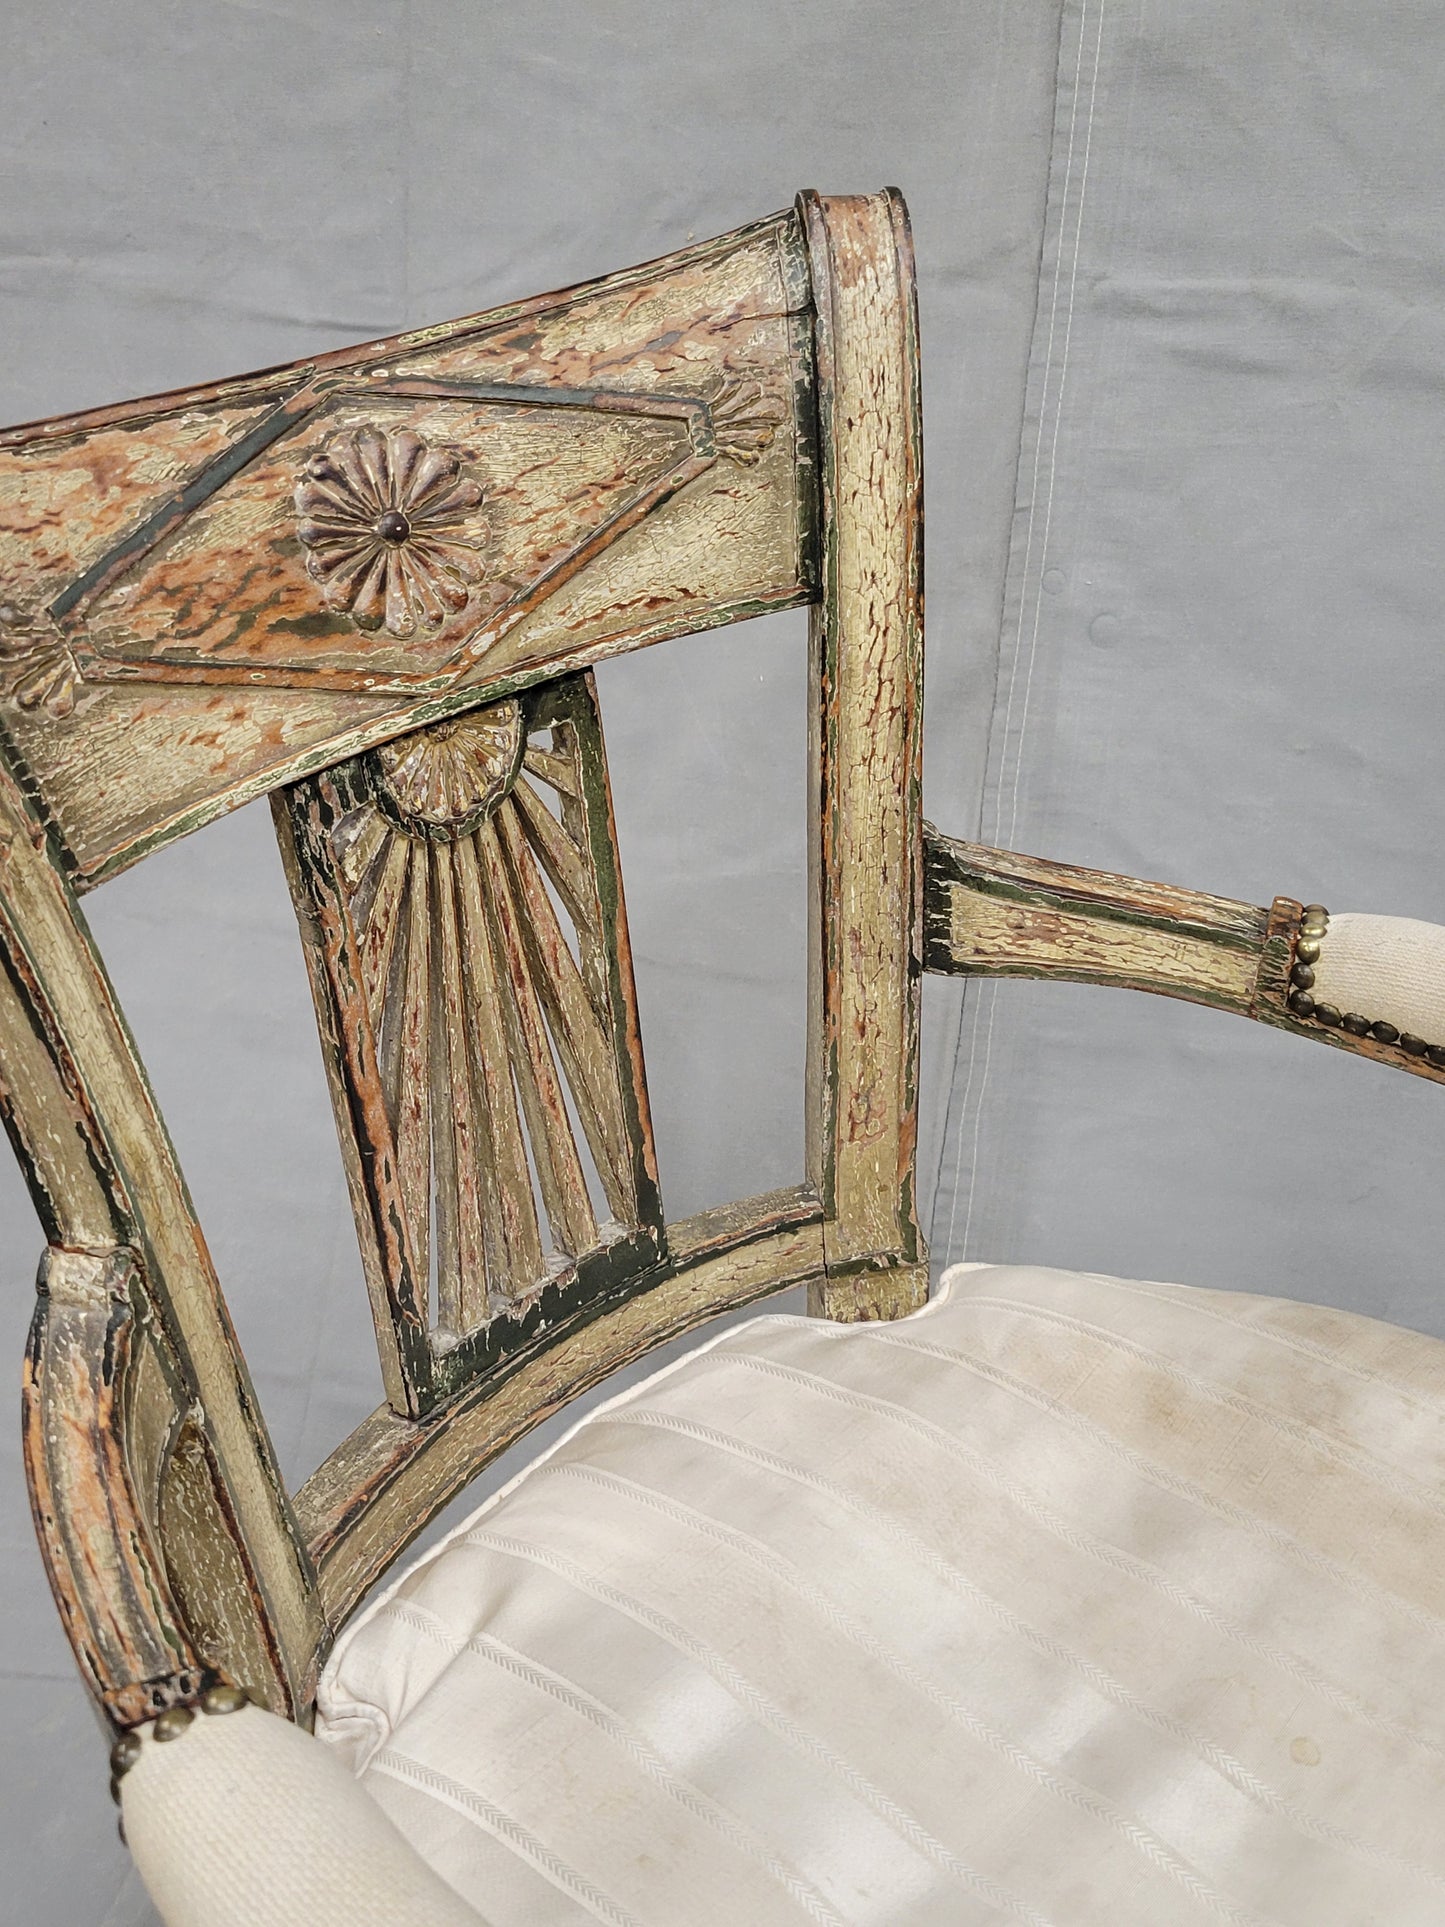 Antique Maison Jansen Style French Louis XVI Painted Fauteuil Chairs - a Pair